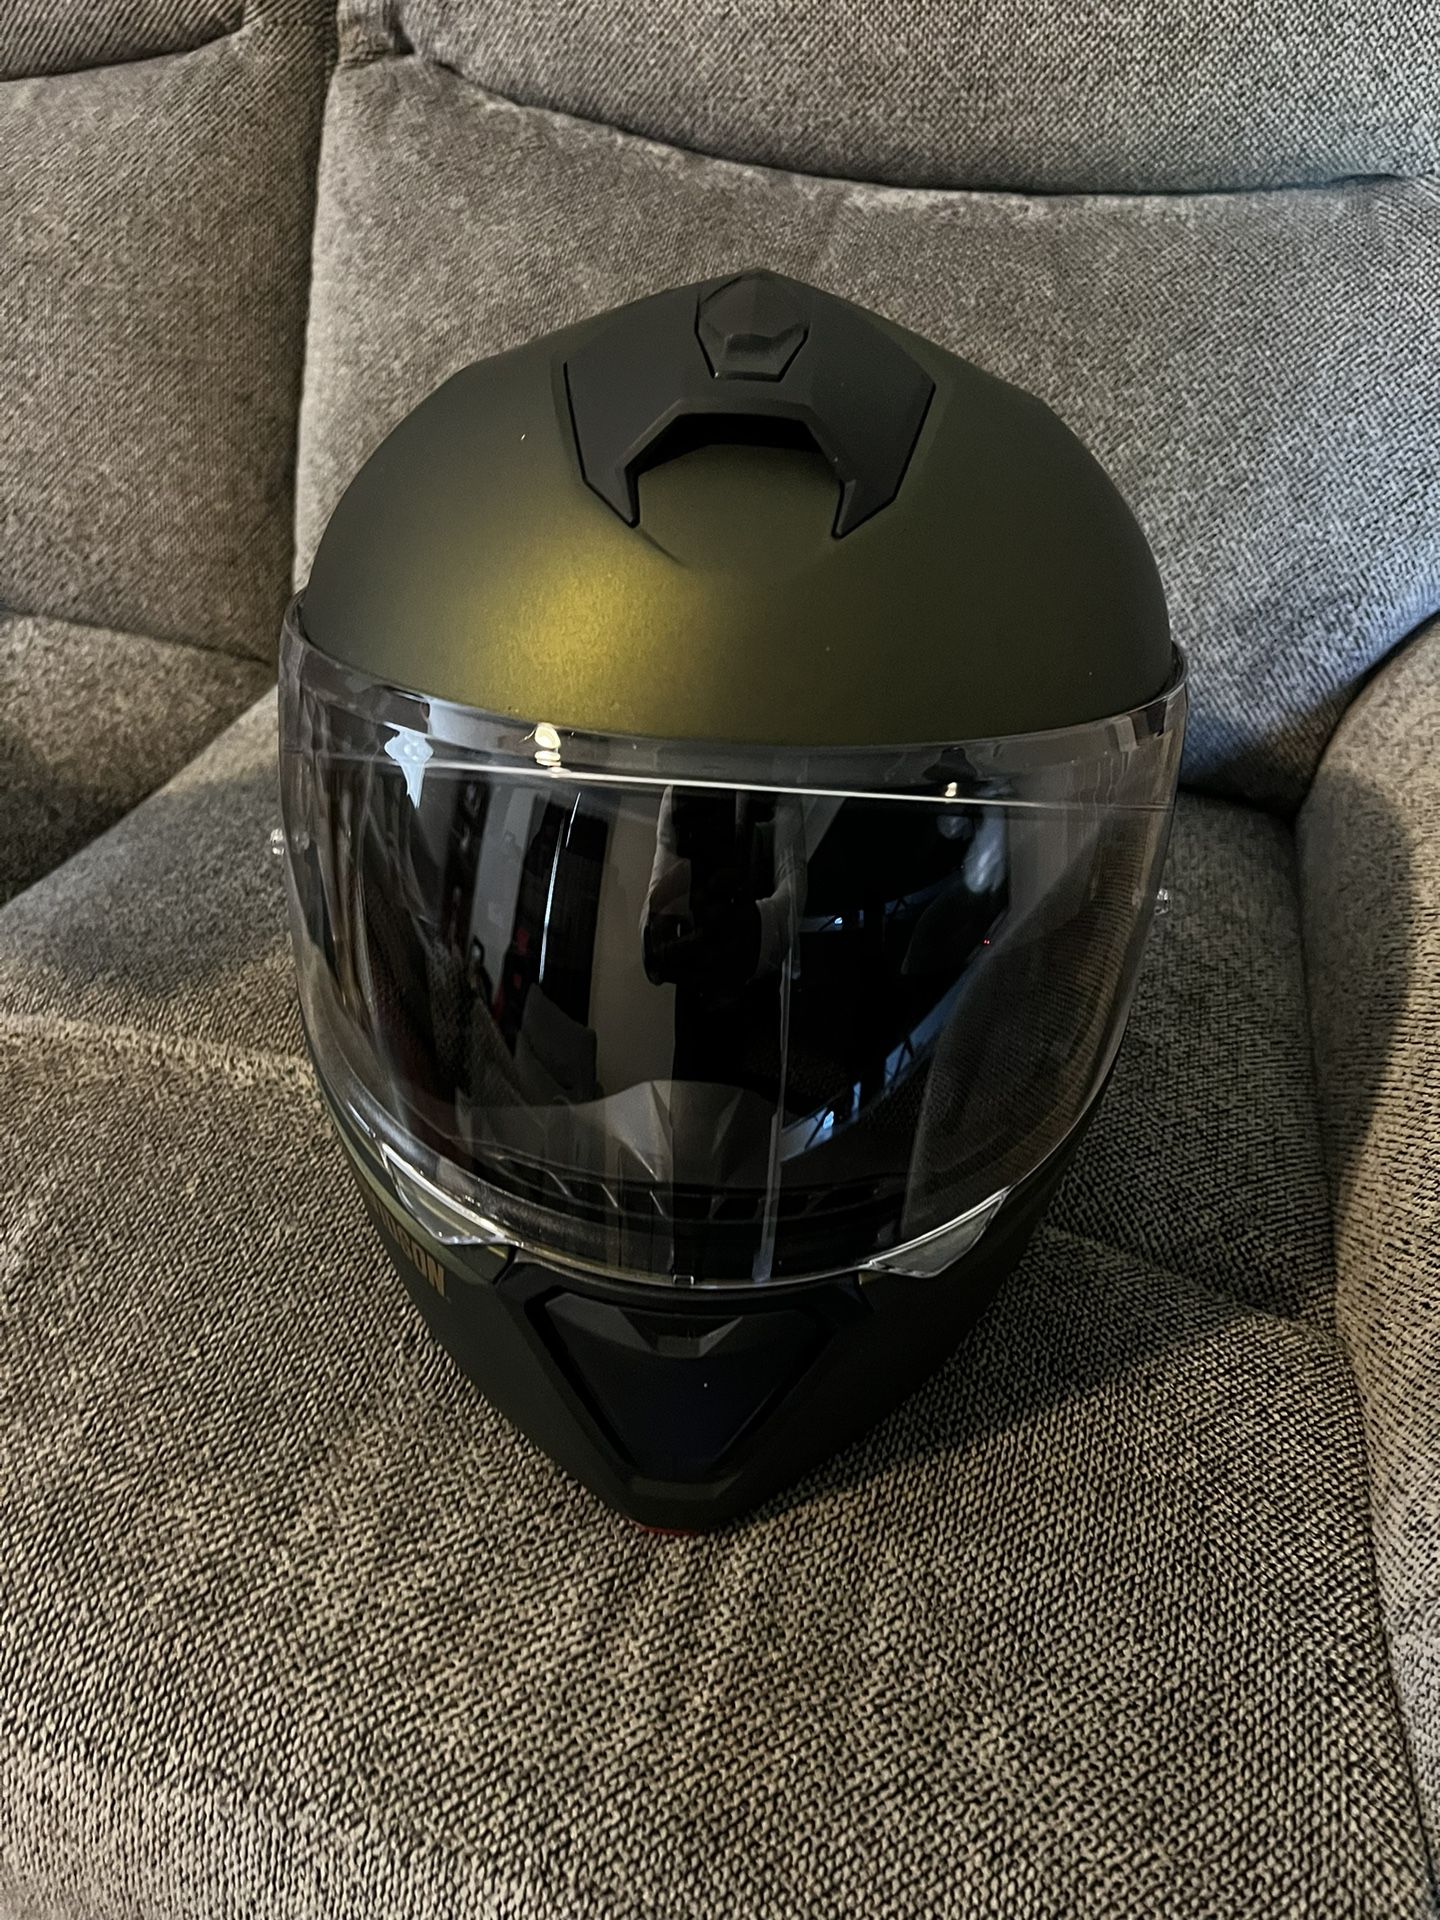 Harley Davidson Helmet XL